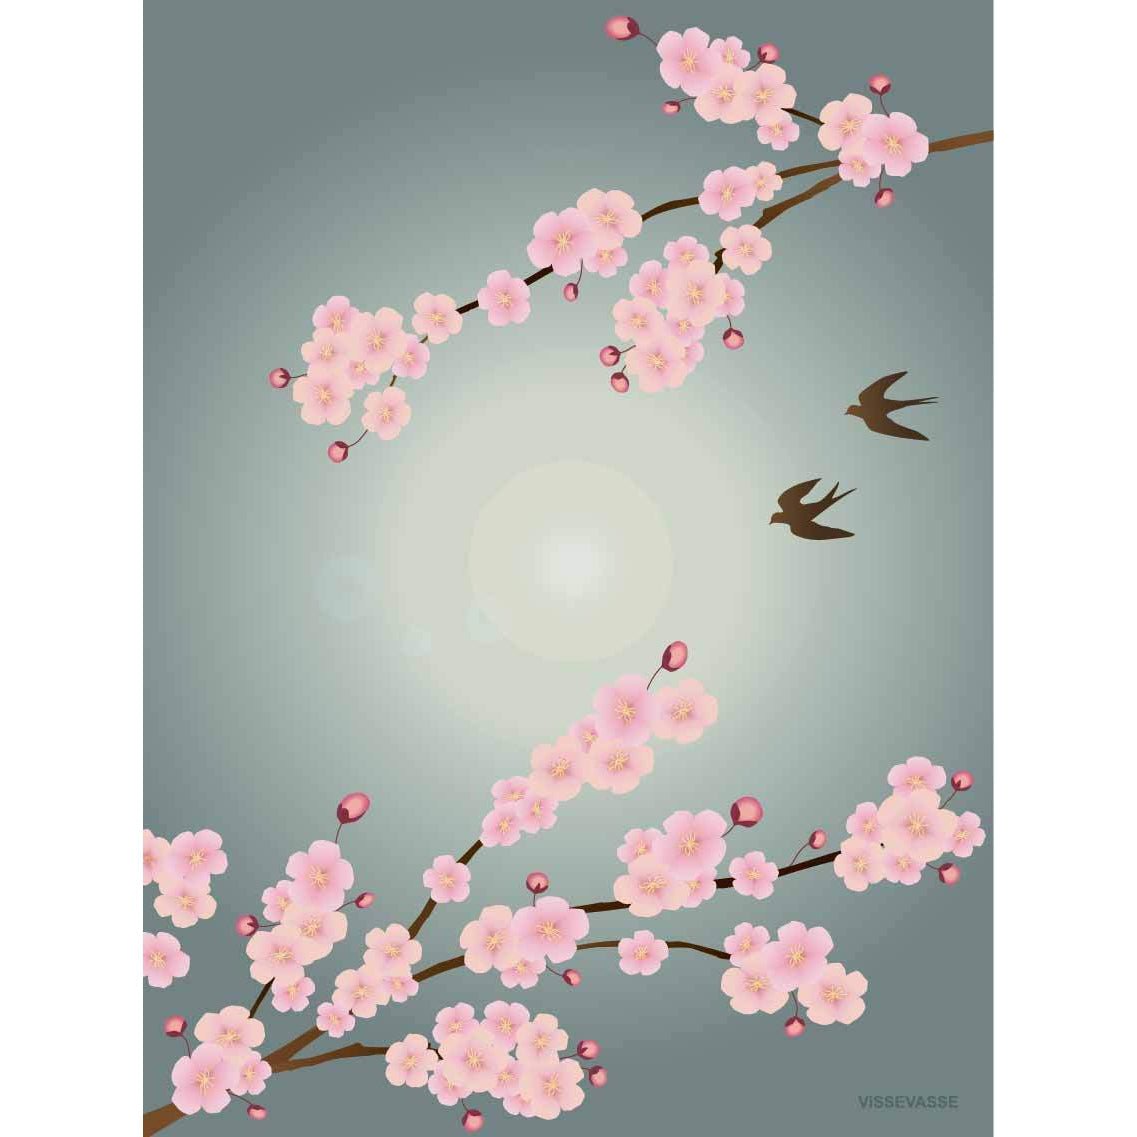 Vissevasse Sakura Greeting Card, 10,5x15cm